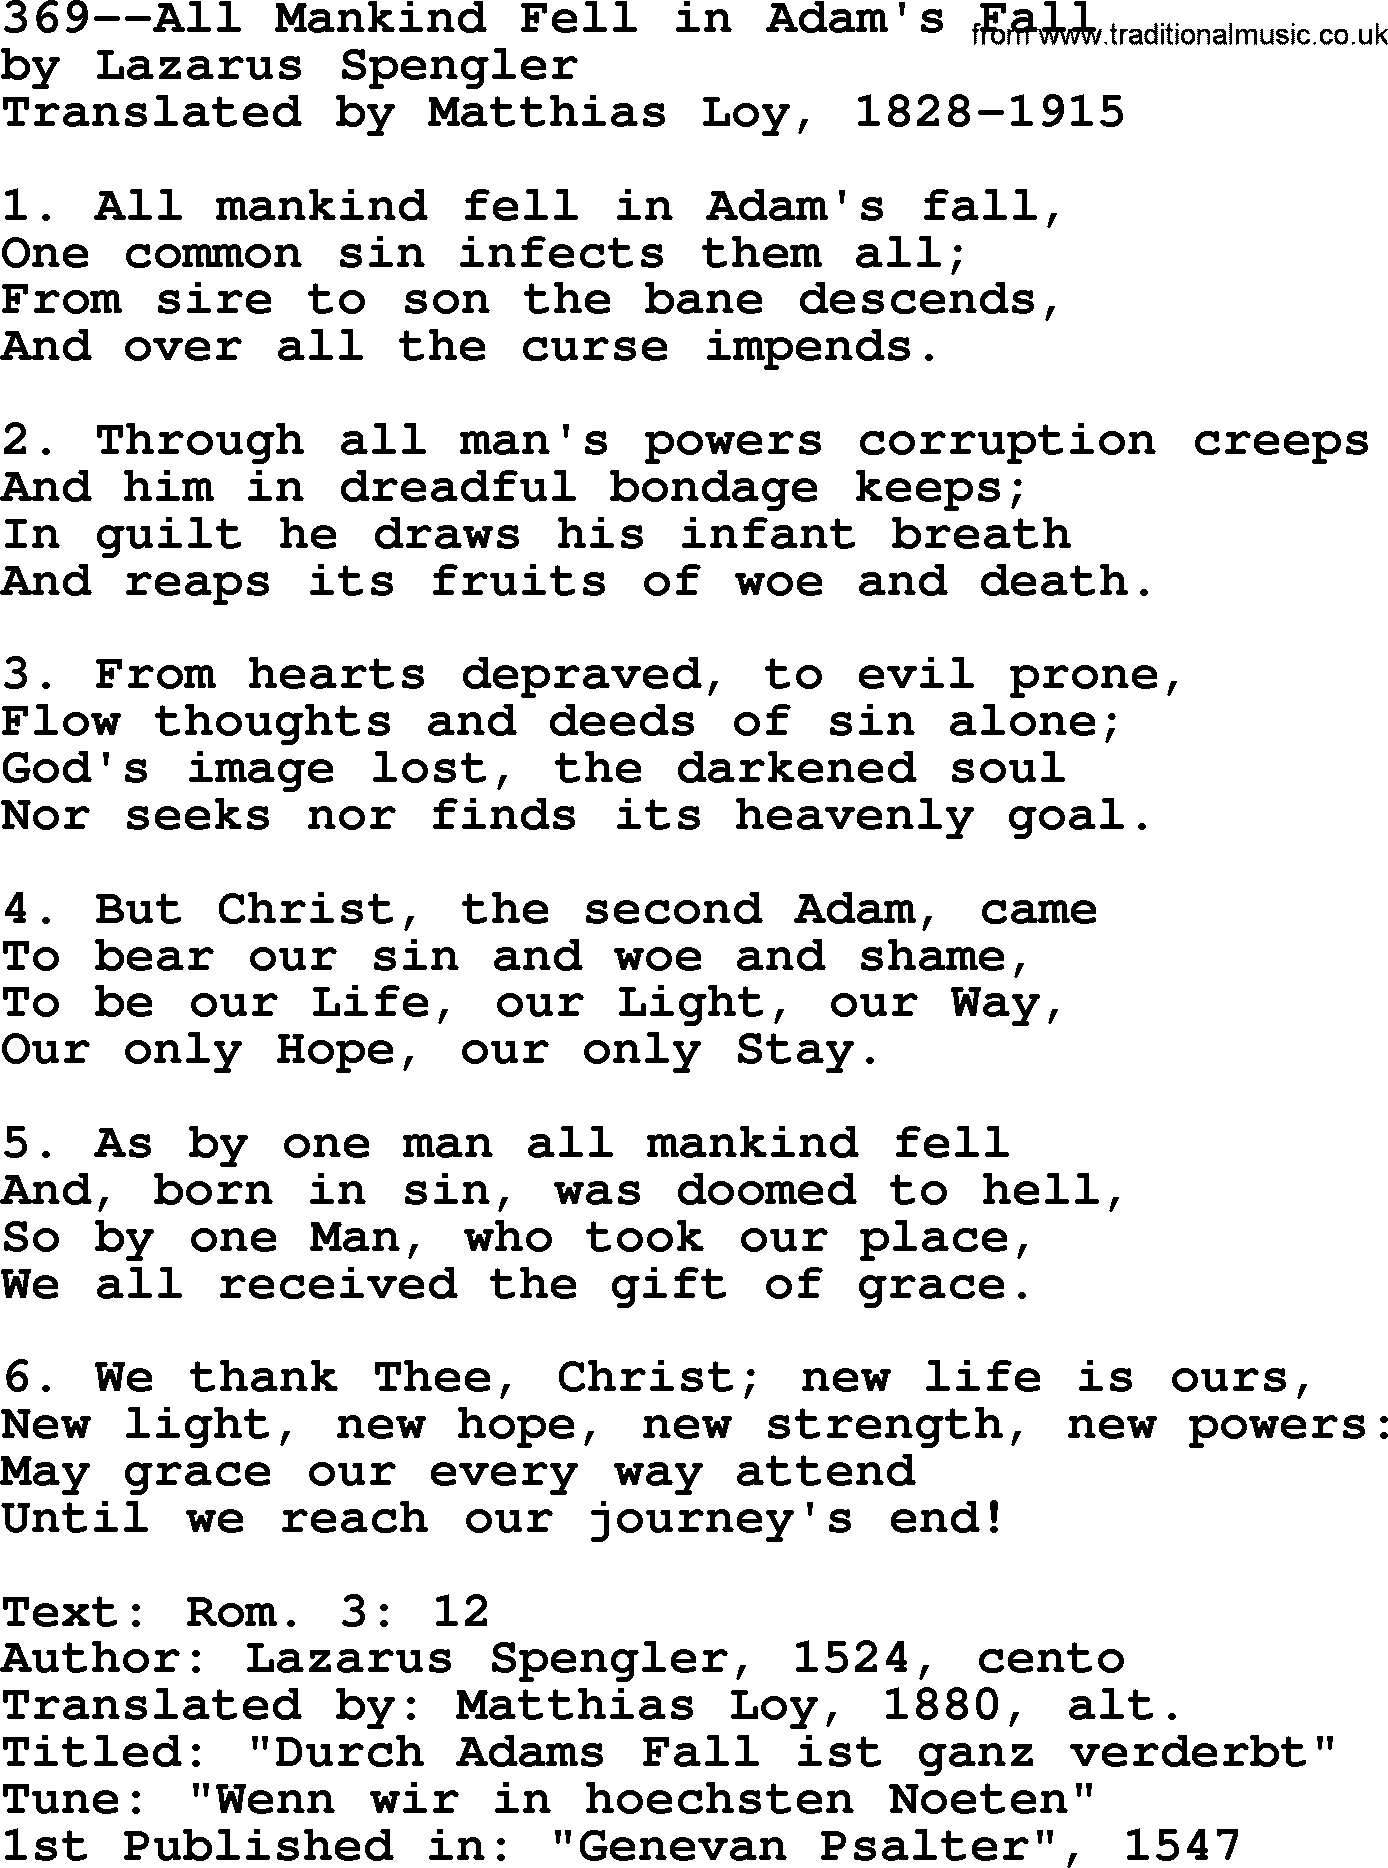 Lutheran Hymn: 369--All Mankind Fell in Adam's Fall.txt lyrics with PDF